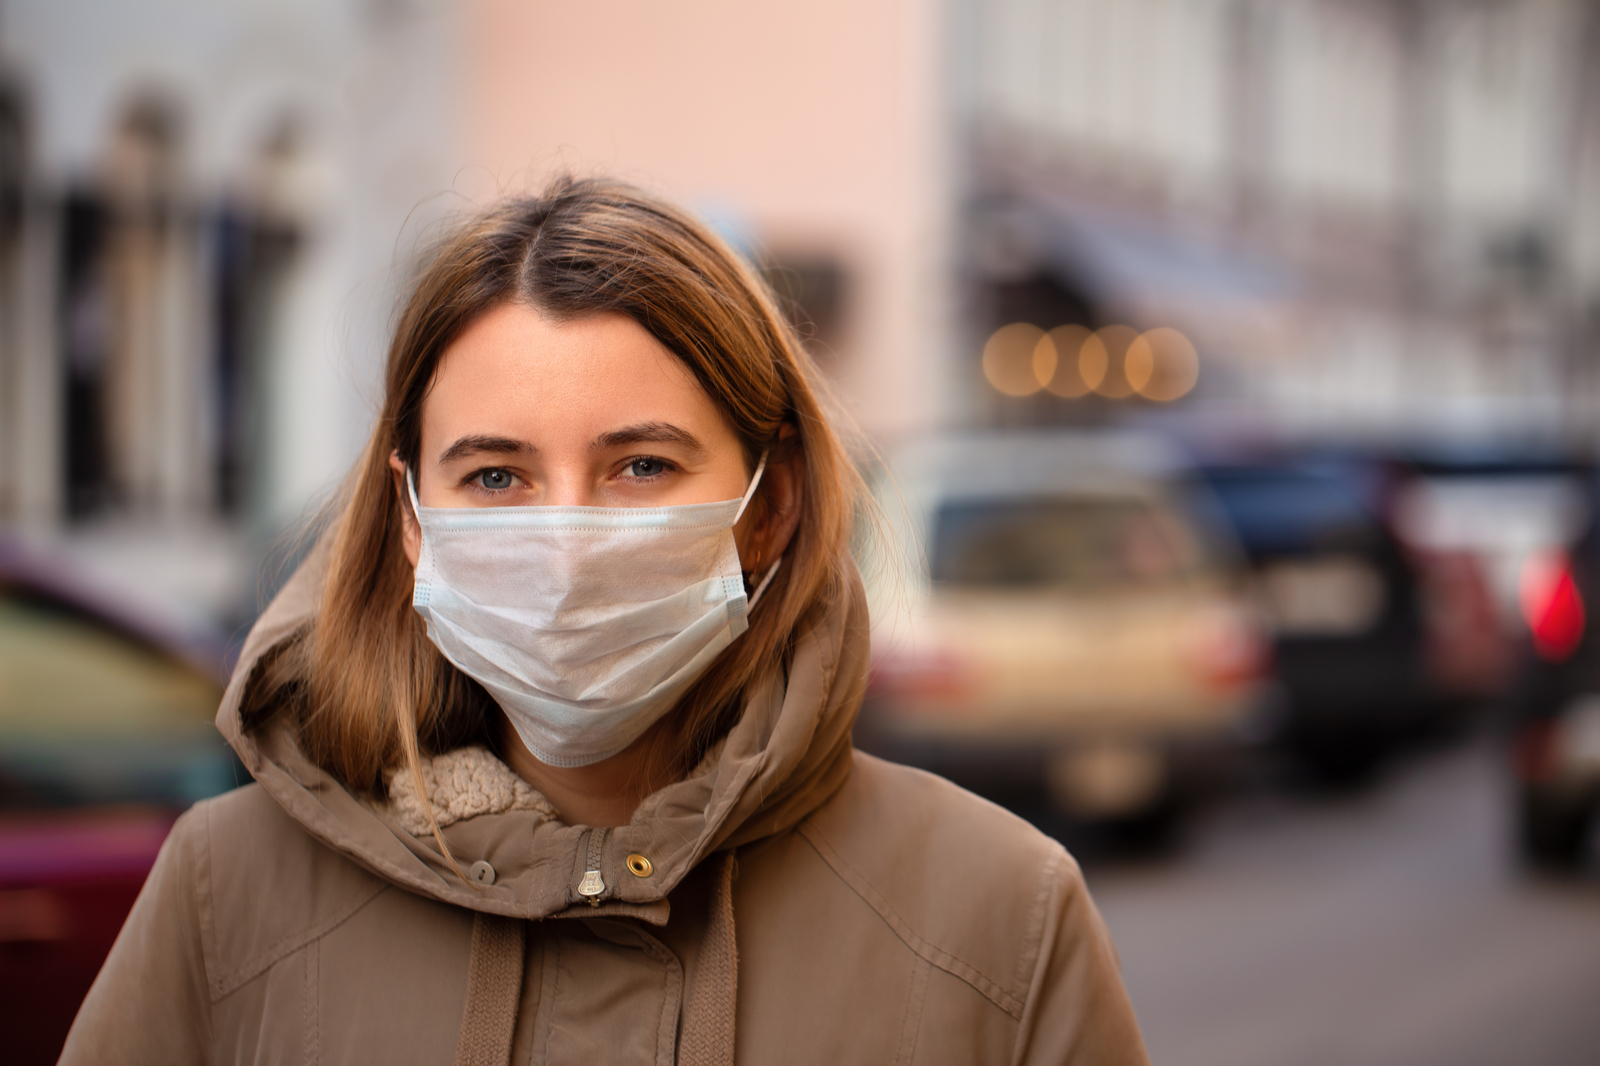 Woman wearing face mask during coronavirus outbreak